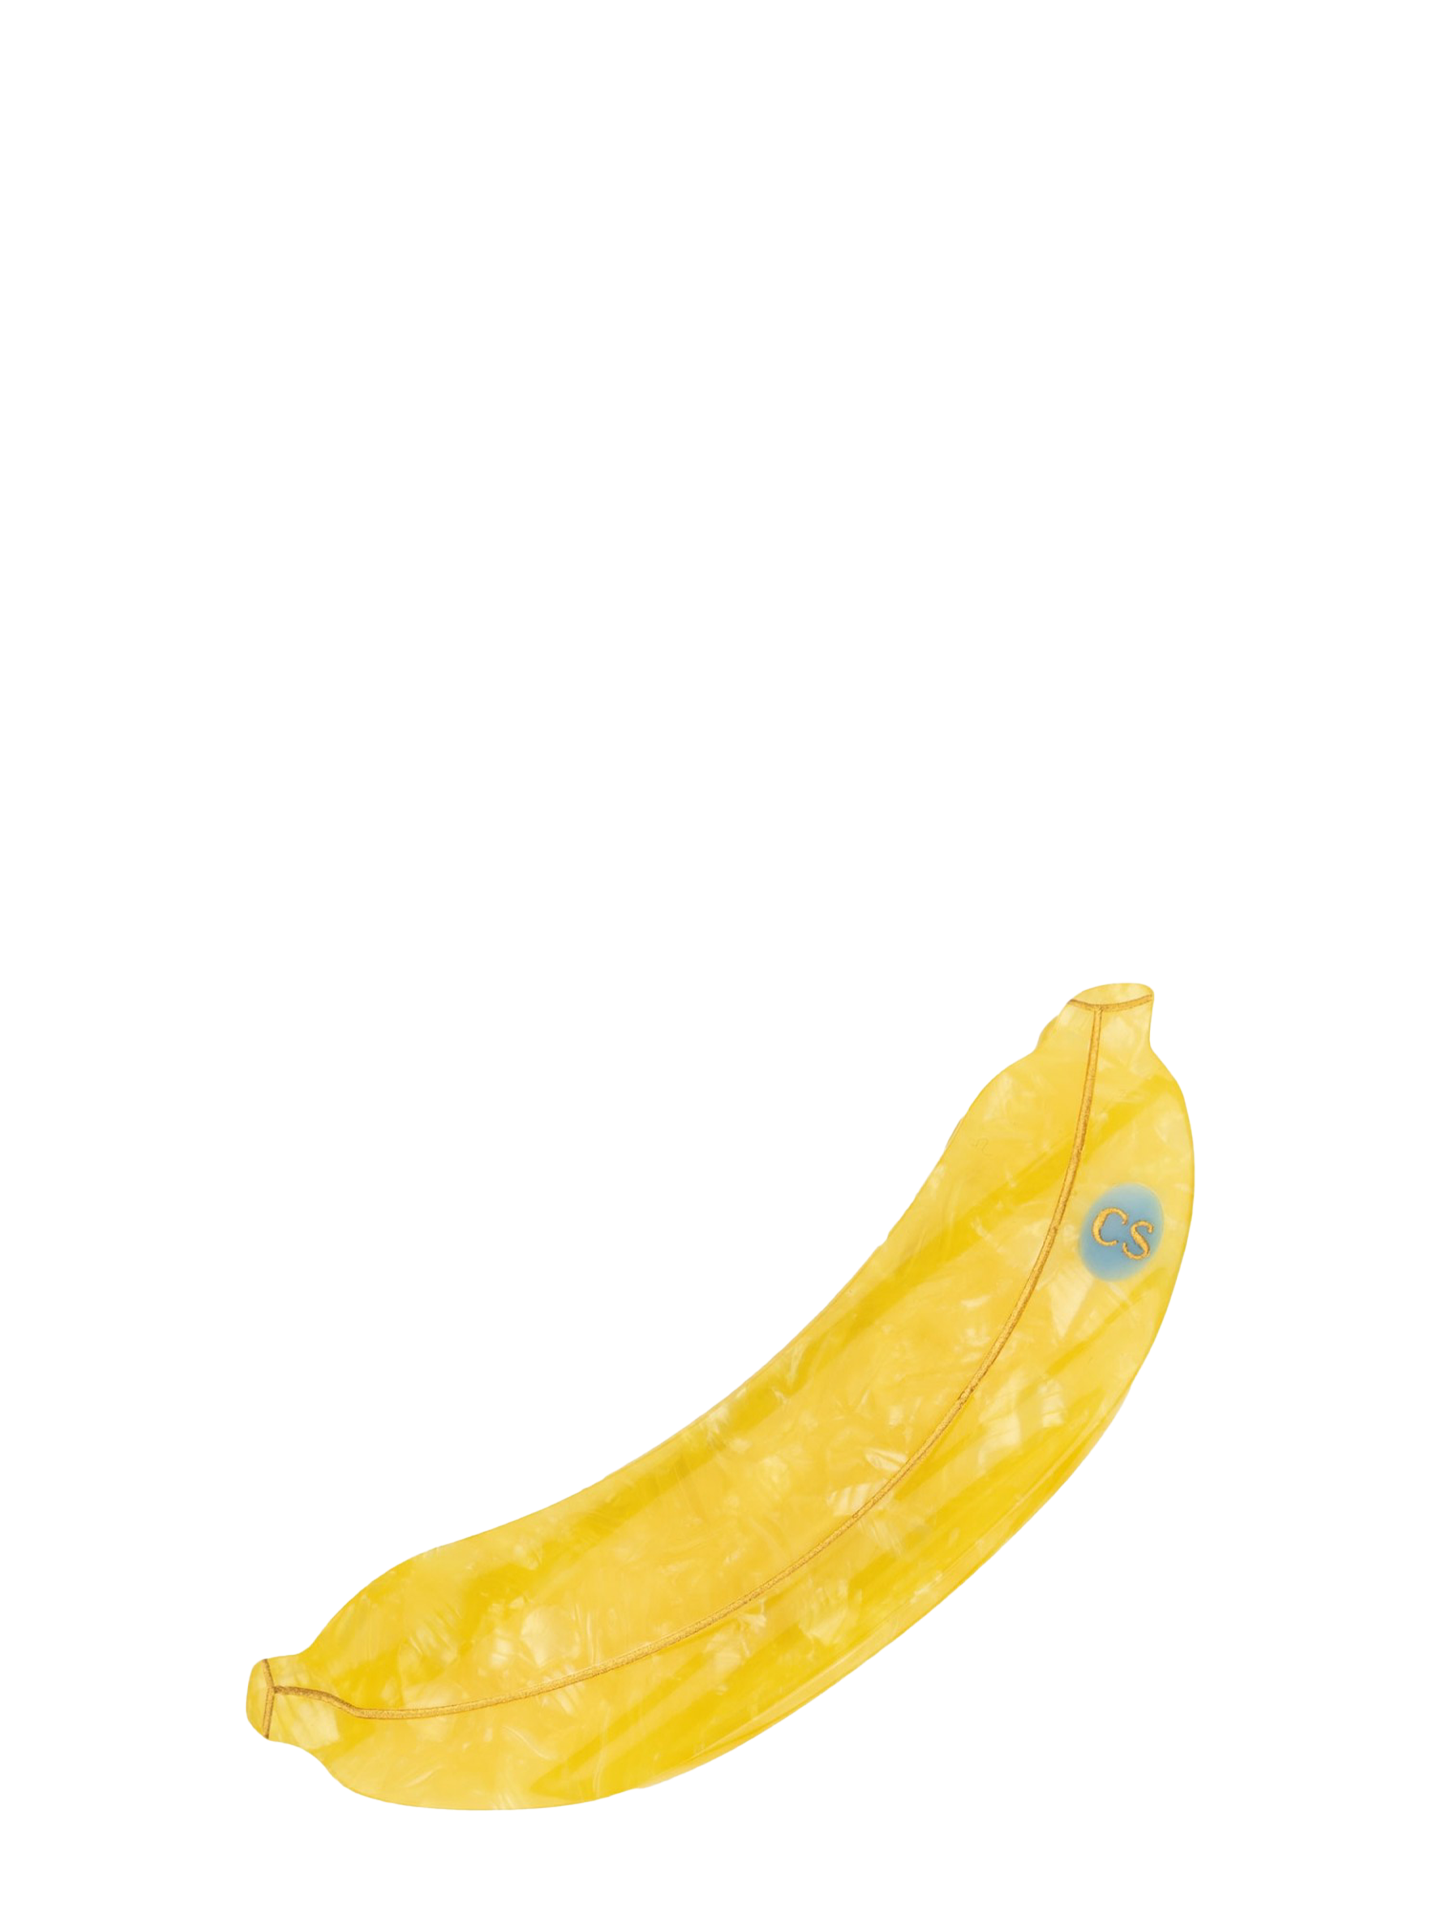 Banana hair claw is a fruity-fun in the hair-do.